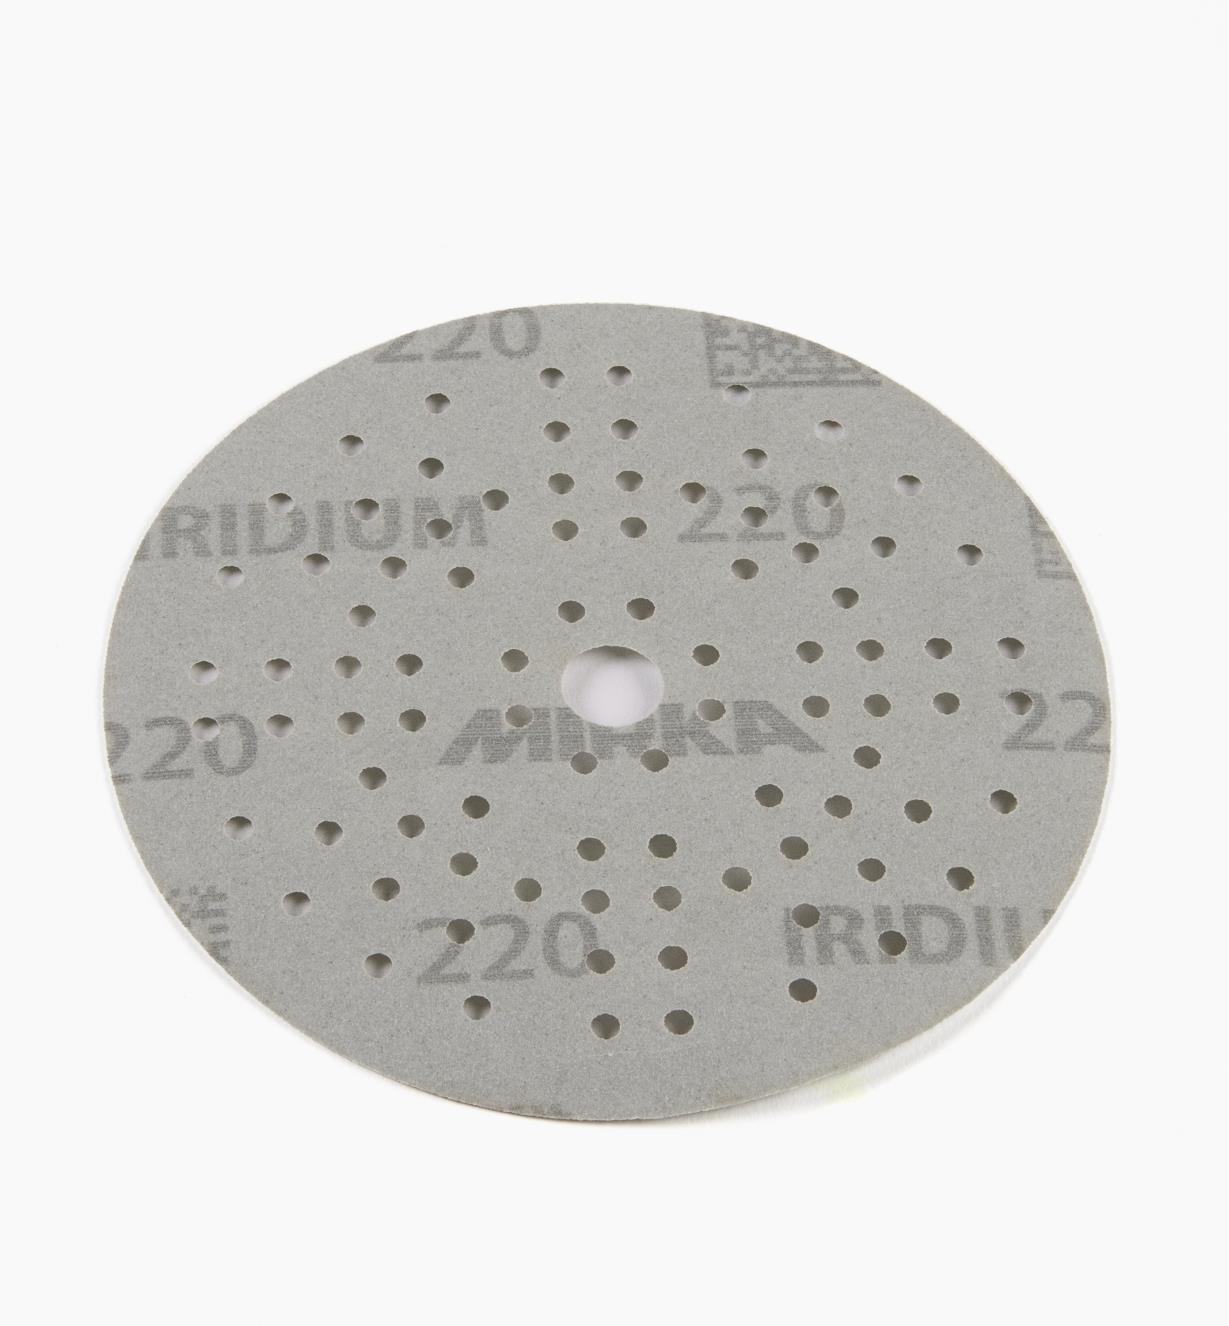 08K0927 - 220x 5" 89-Hole Iridium Grip Disc, ea.